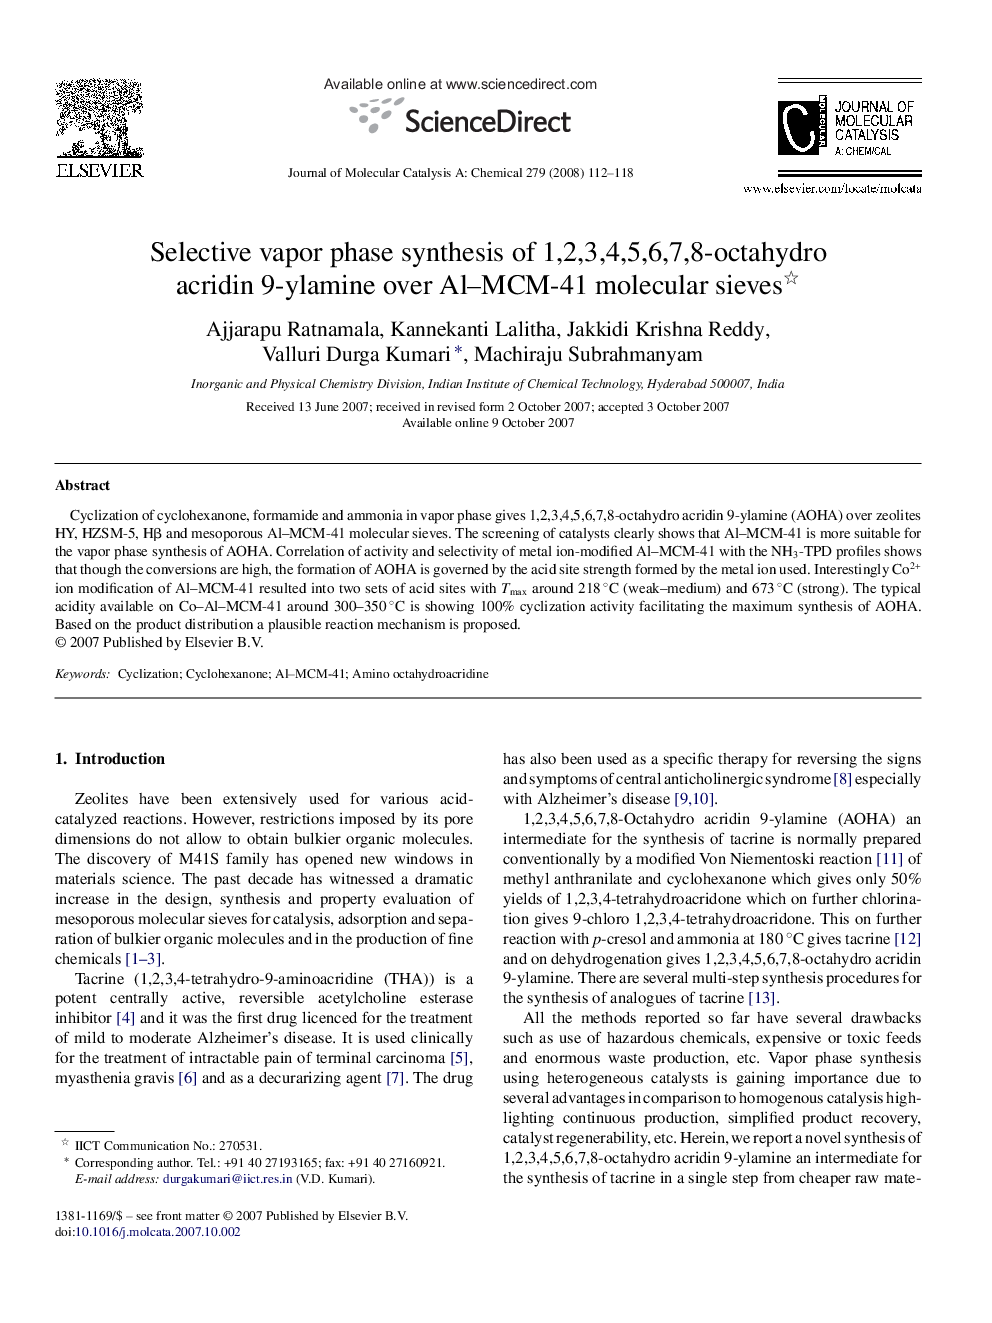 Selective vapor phase synthesis of 1,2,3,4,5,6,7,8-octahydro acridin 9-ylamine over Al–MCM-41 molecular sieves 